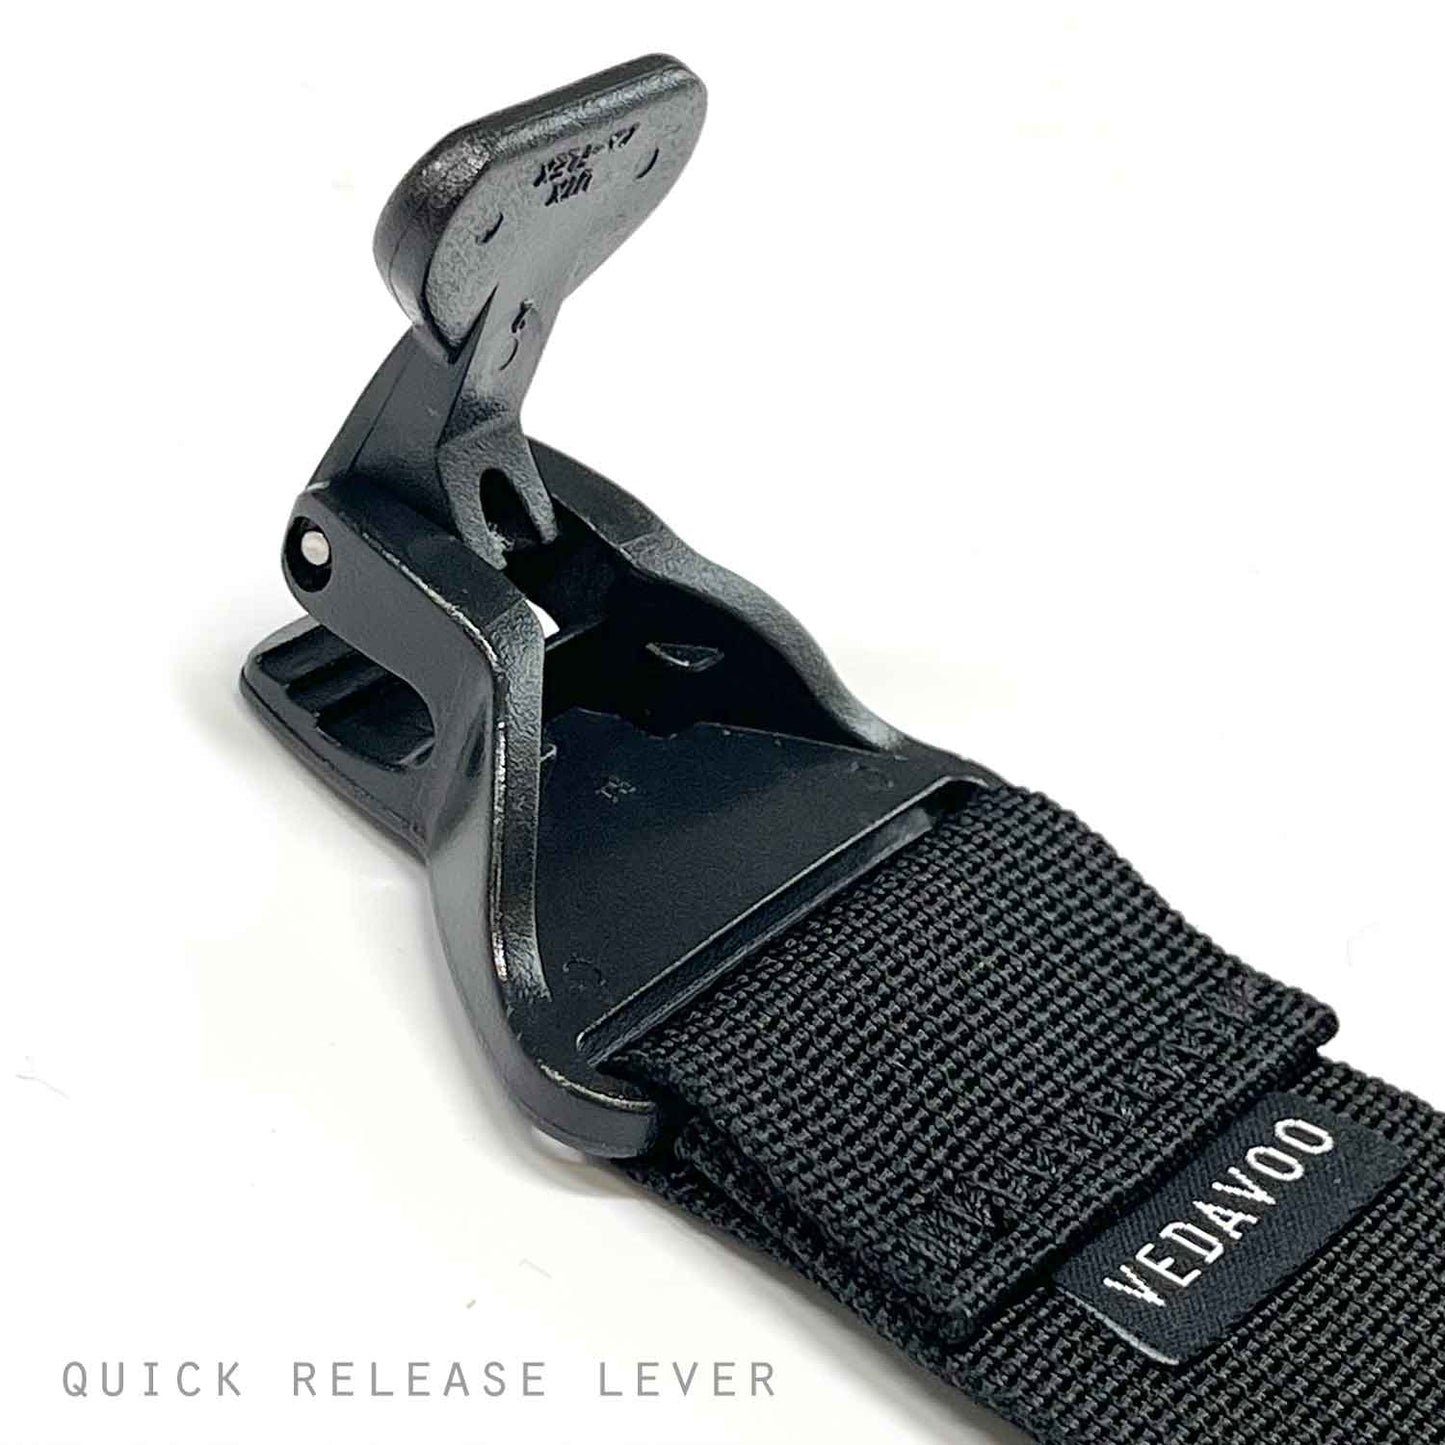 Cam-Clip // Adjustable Side-Release Buckle Strap – VEDAVOO